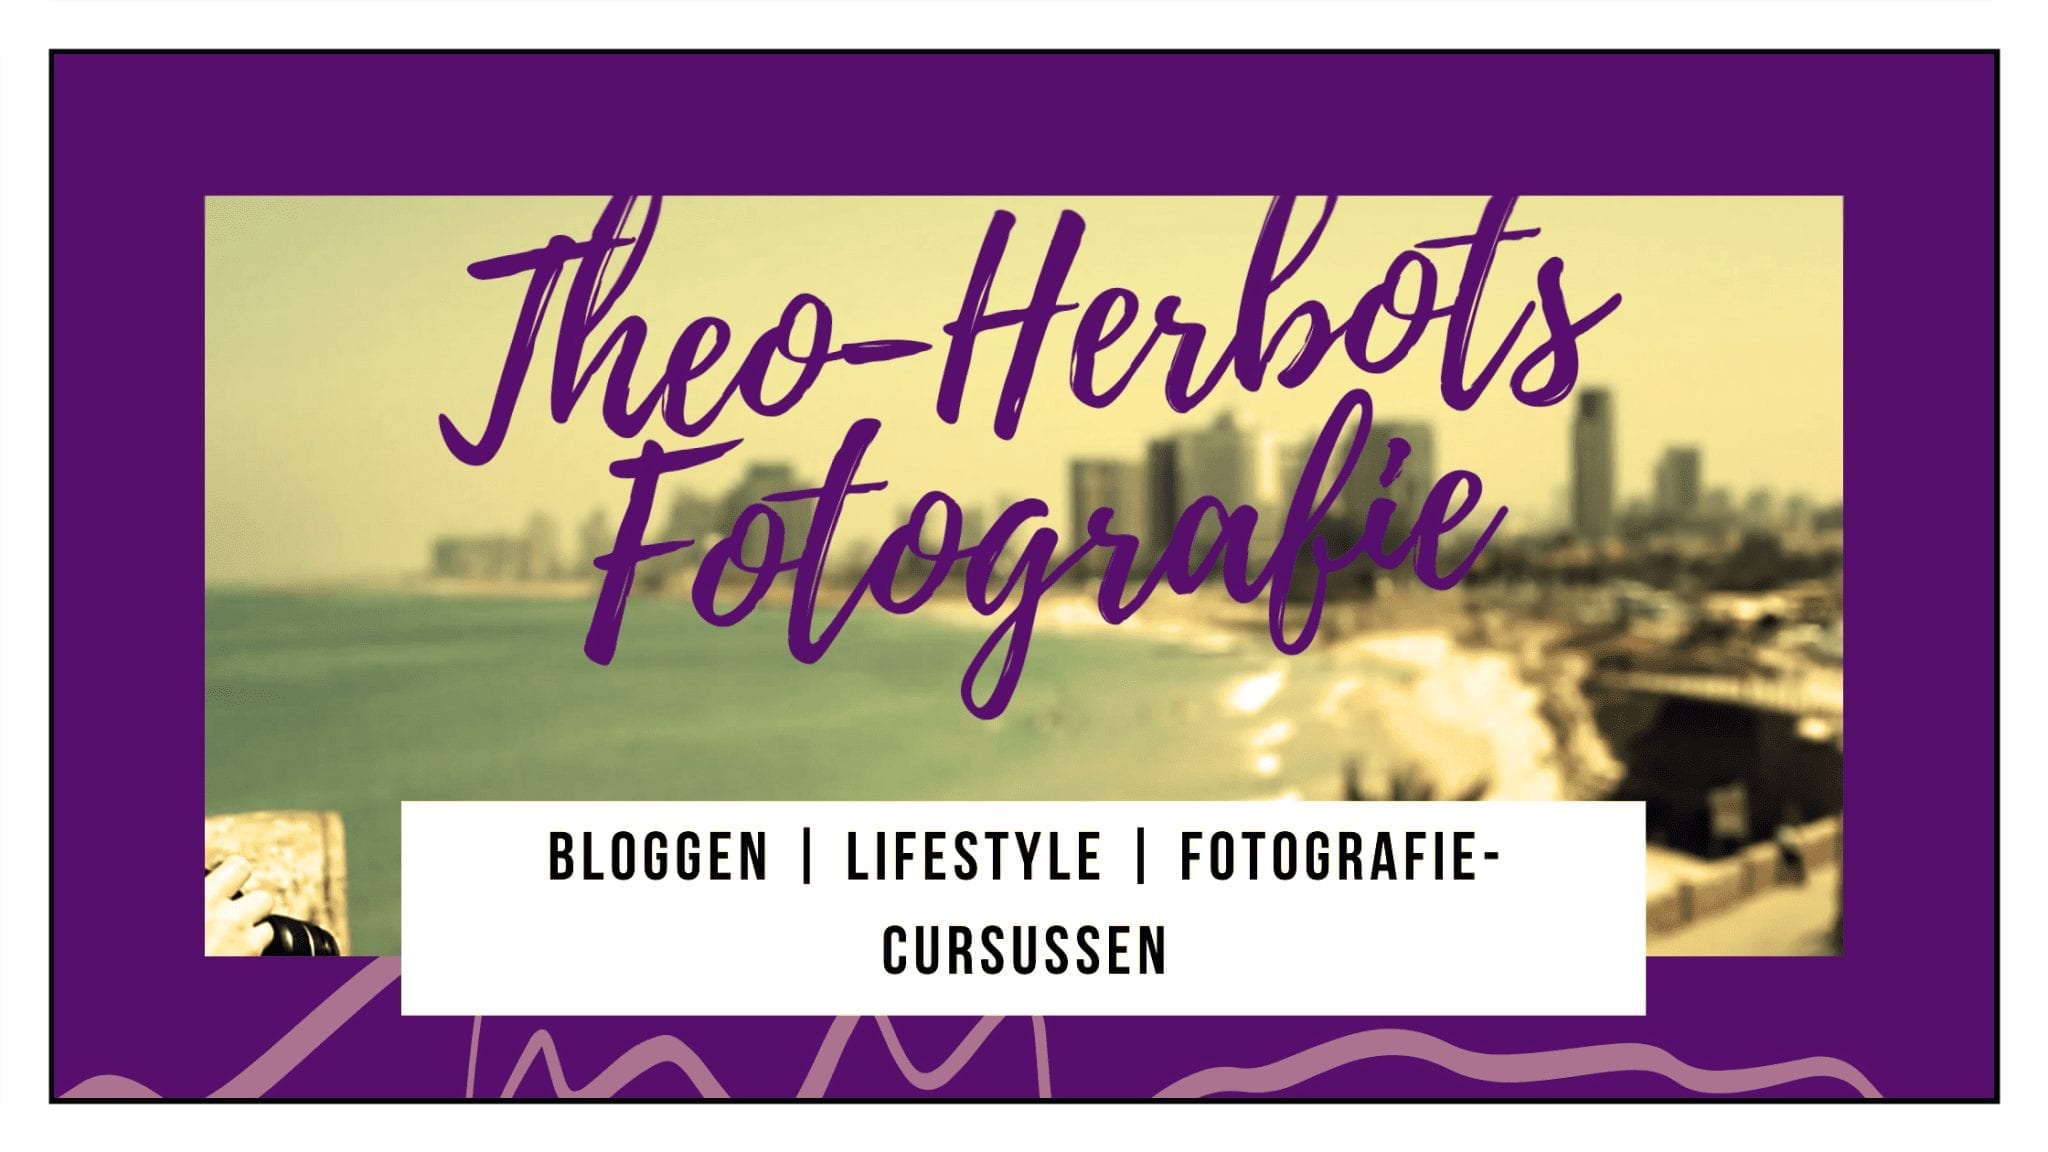 THEO-HERBOTS-ONLINE-FOTOGRAFIE-CURSUSSEN